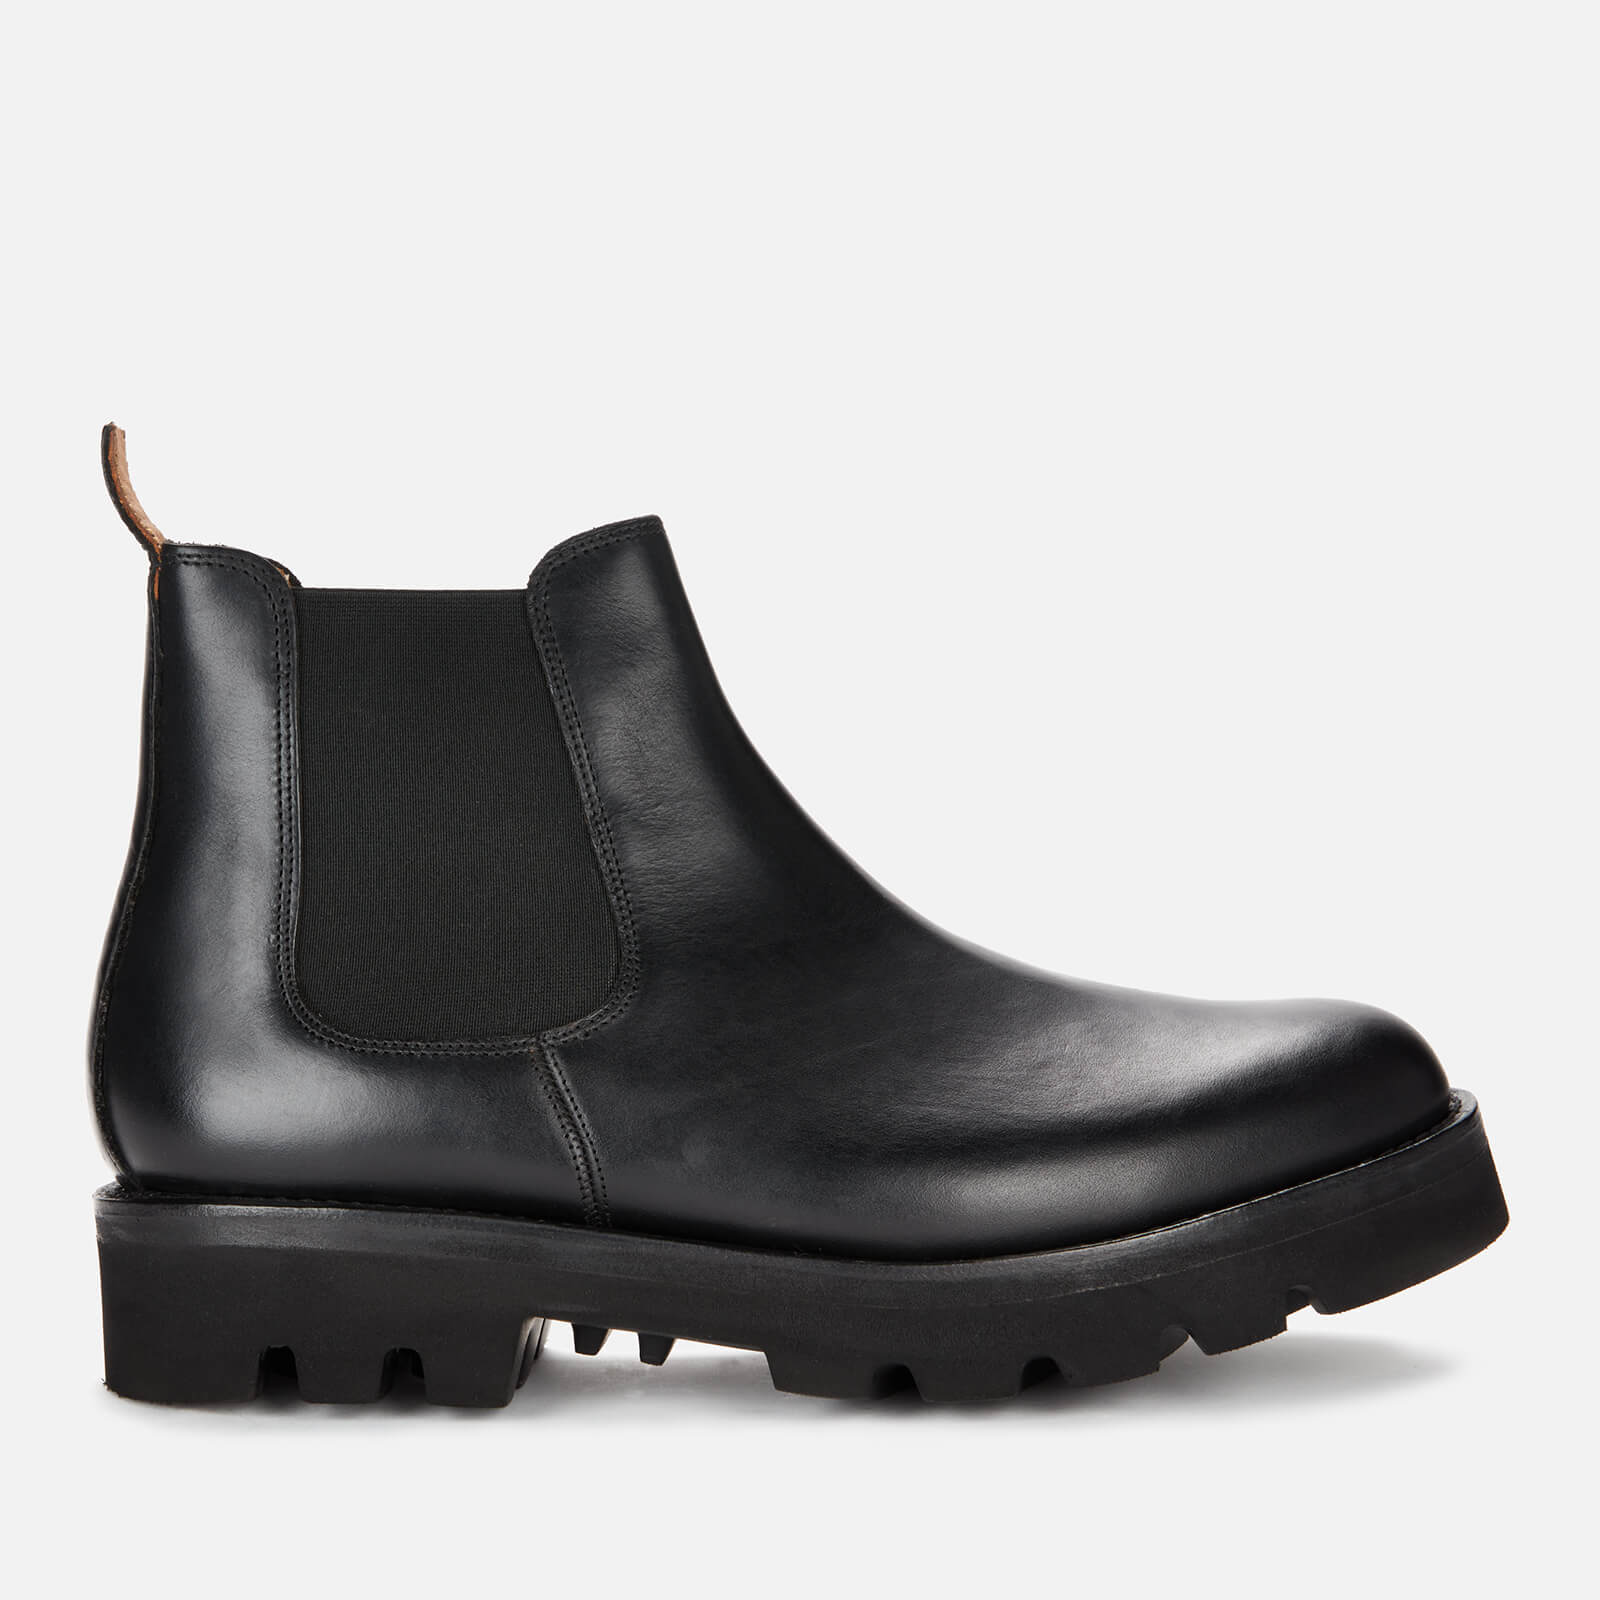 Grenson Men's Warner Leather Chelsea Boots - Black - UK 10